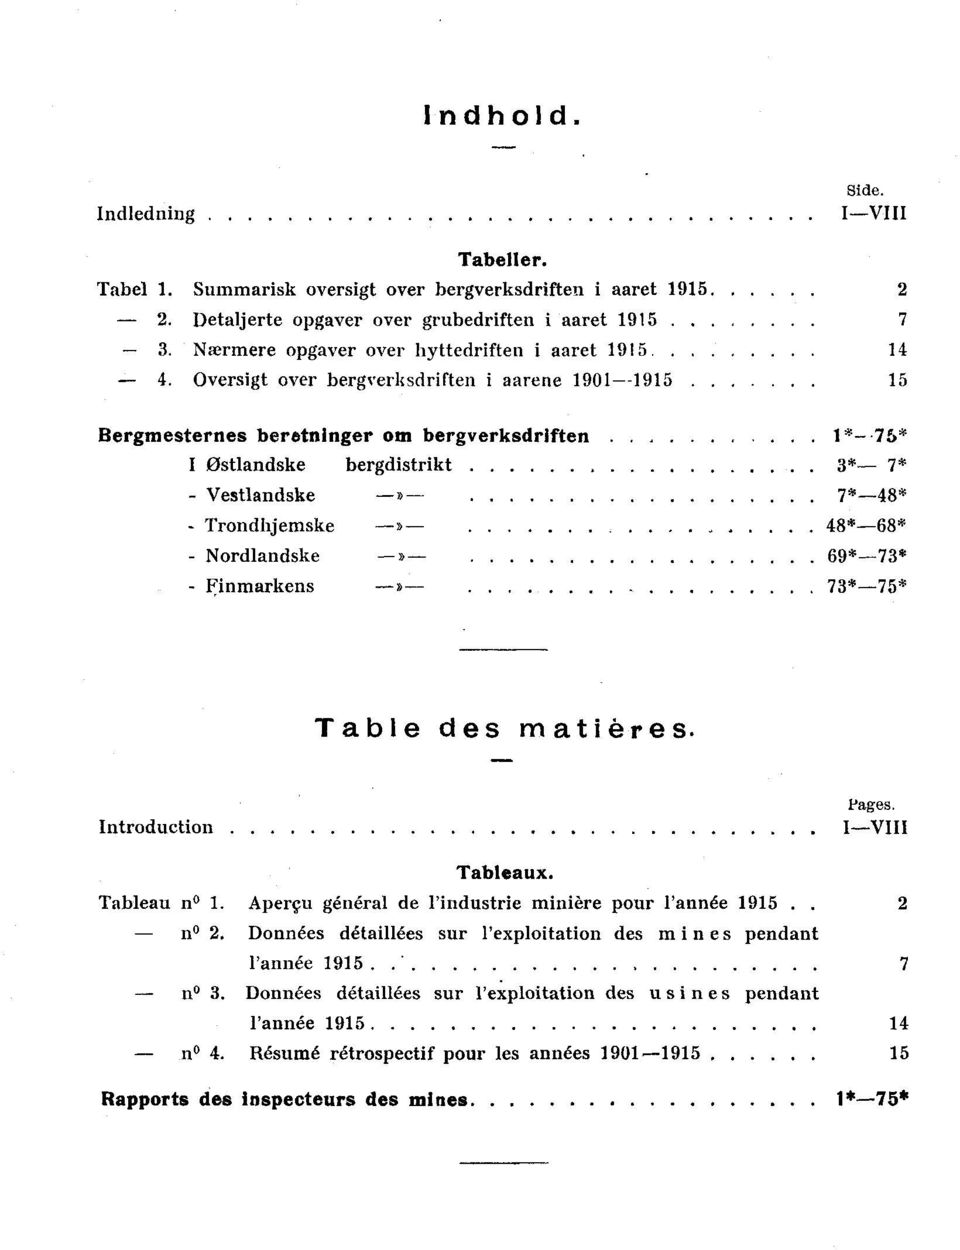 Oversigt over bergverksdriften i aarene 1901-1915 15 Bergmesternes beretninger om bergverksdriften 1:3-75* I Østlandske bergdistrikt 3* 7* - Vestlandske» 7*-48* - Trondhjemske»- 48*-68* -